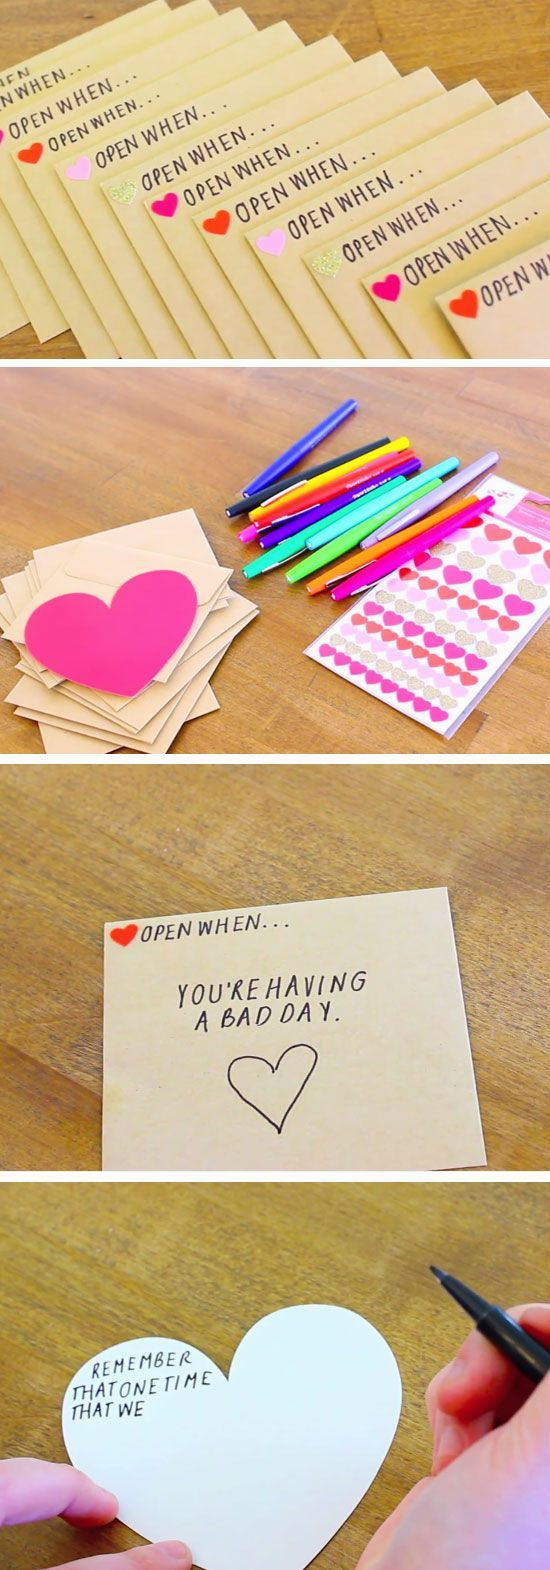 Best ideas about DIY Gifts For Boyfriends Birthday
. Save or Pin 25 best ideas about Diy birthday t on Pinterest Now.